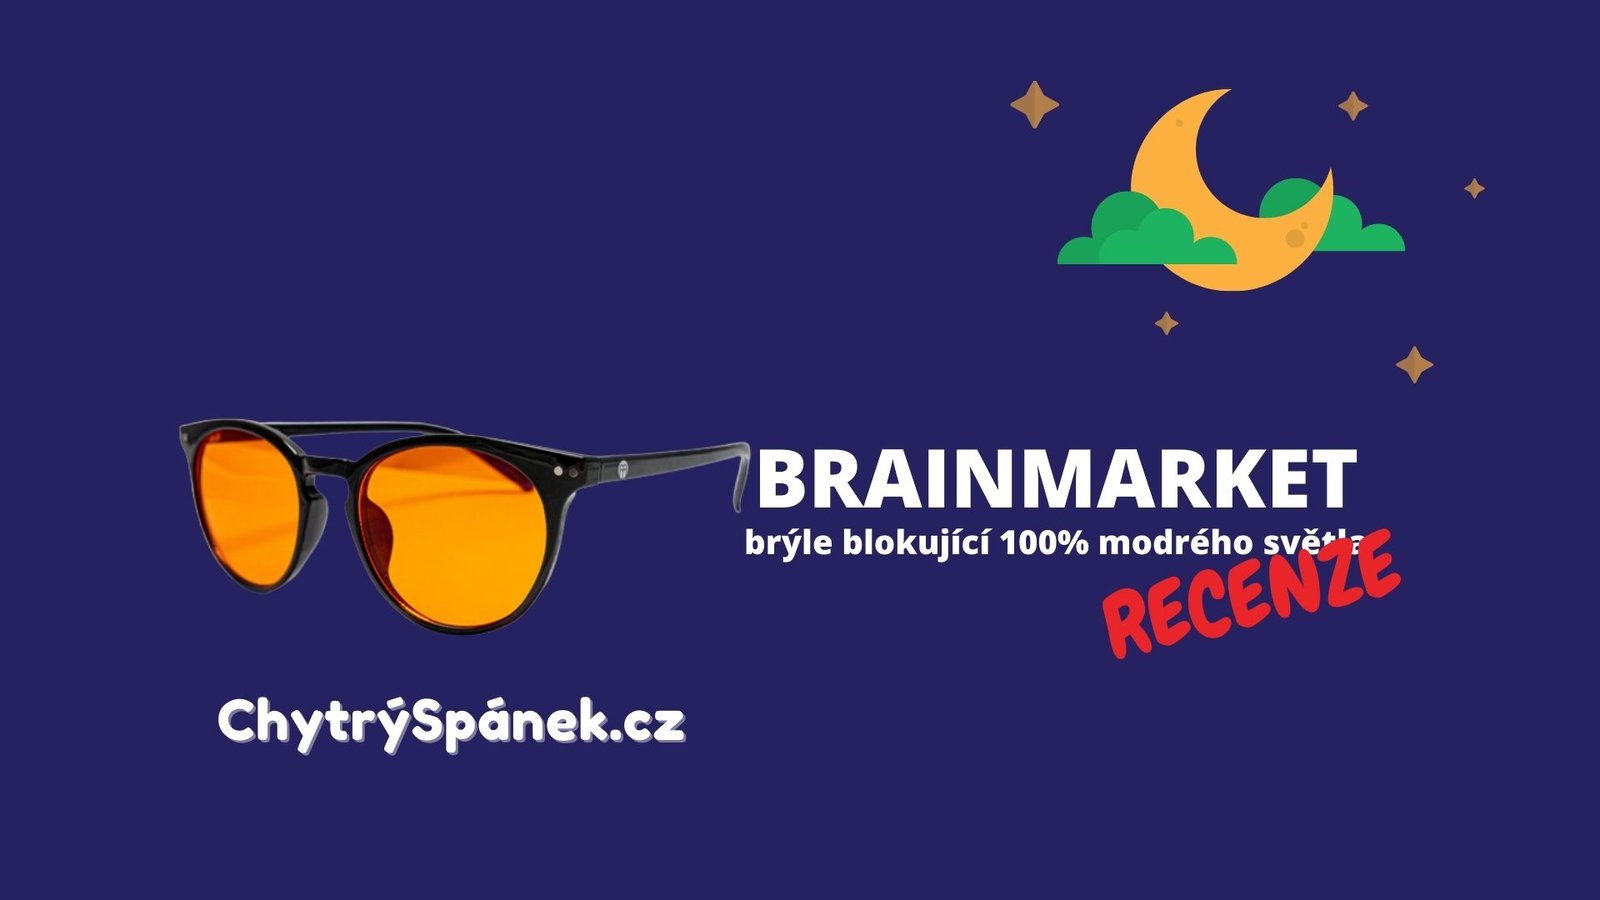 Brainmarket Bryle Protimodremusvetlu